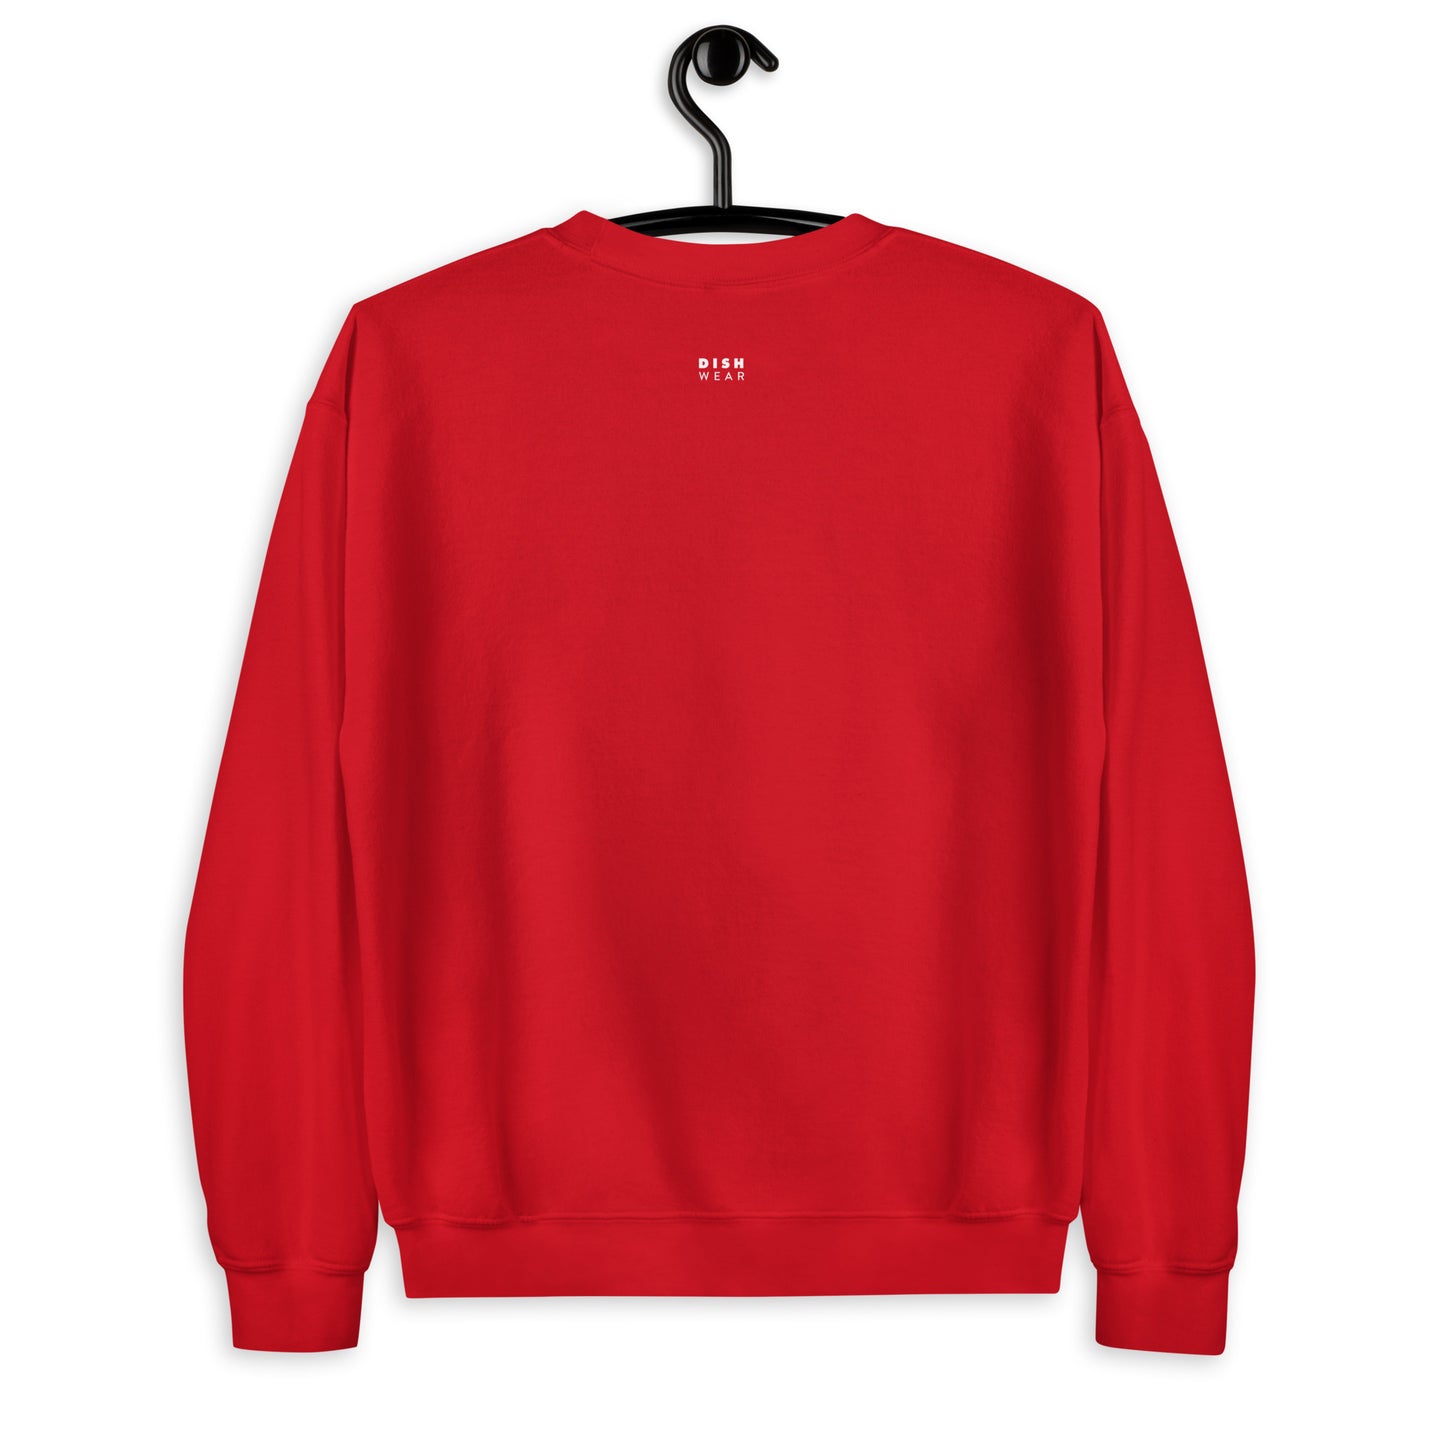 Bagel Sweatshirt - Straight Font